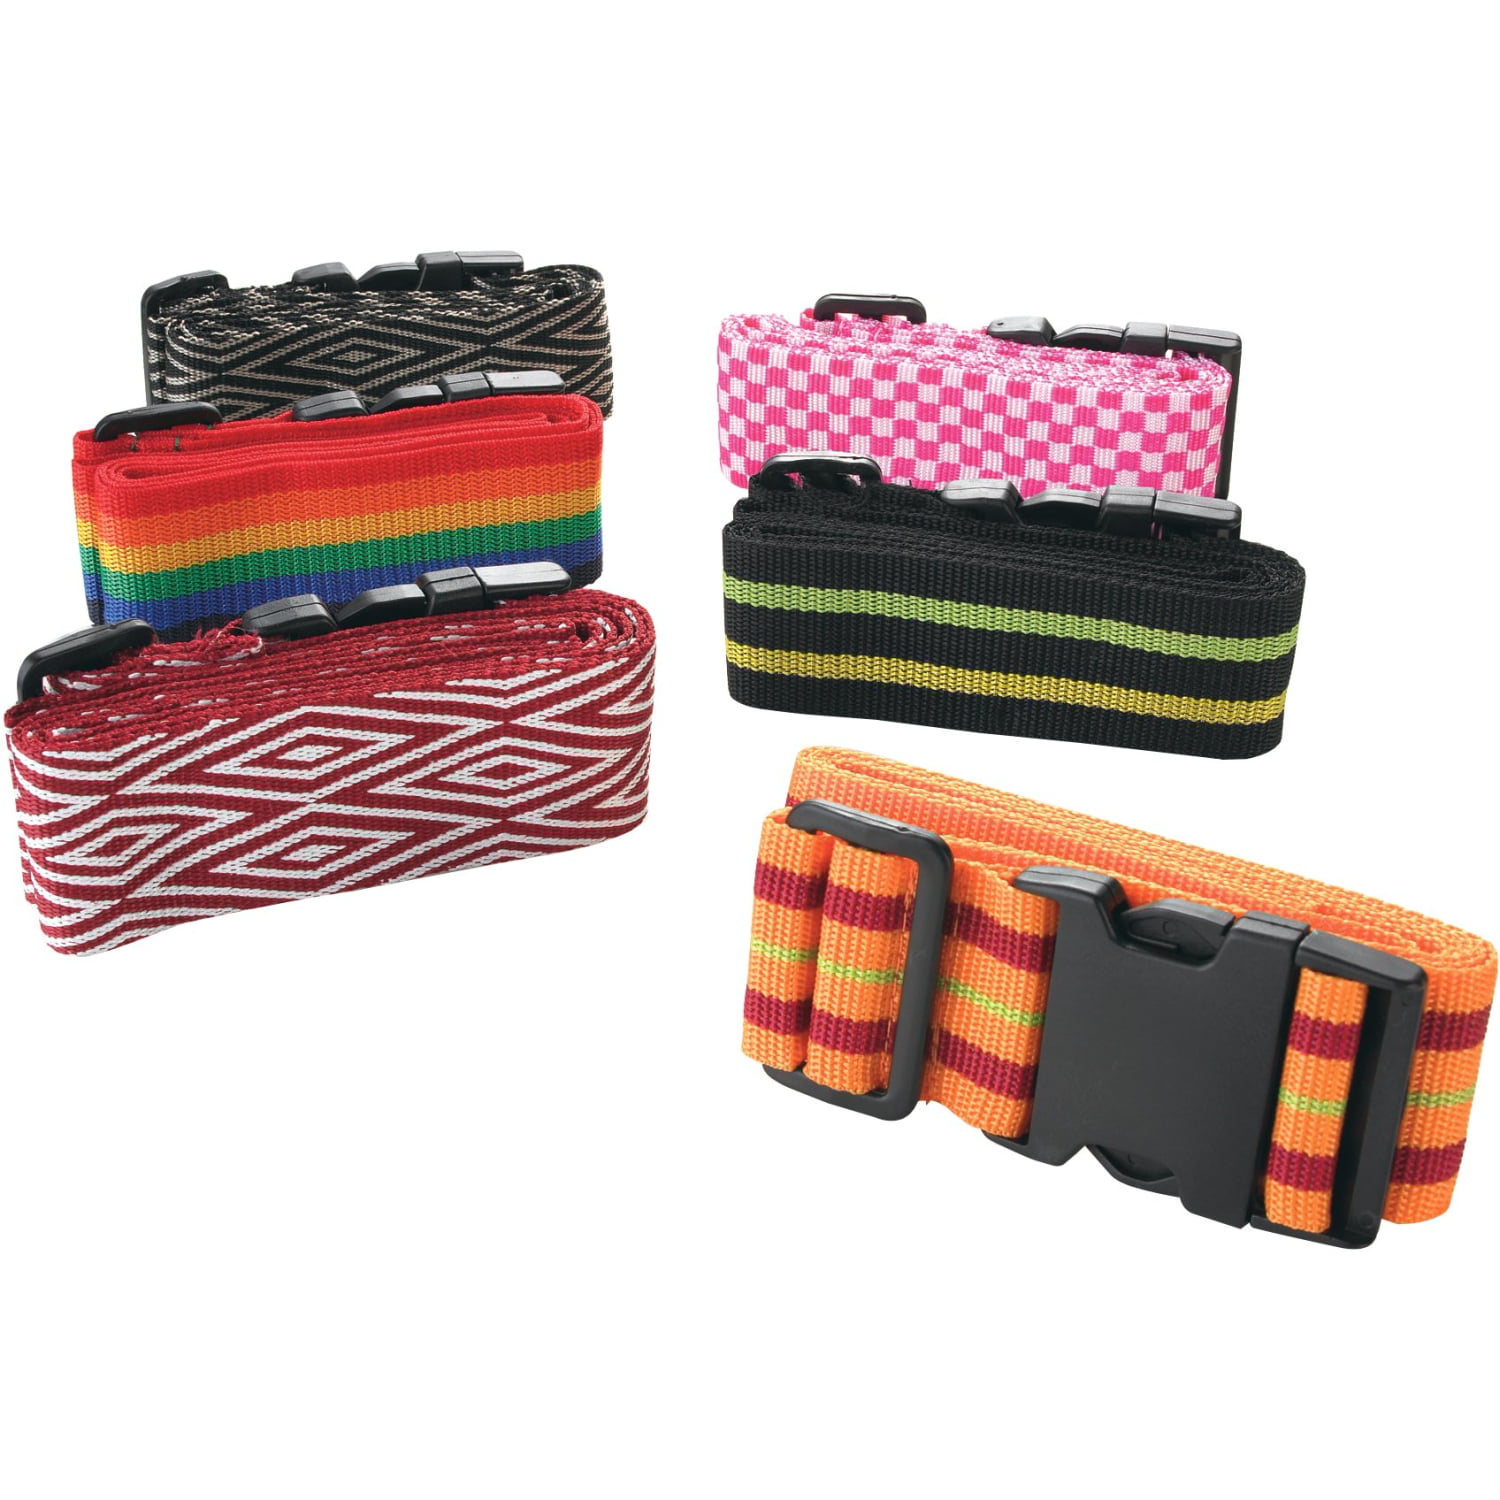 GLORY ART Heavy Duty Suitcase Belt Circuit Board Travel Adjustable Luggage Strap TSA Lock Security Belts Travel Accessories Bag Straps 